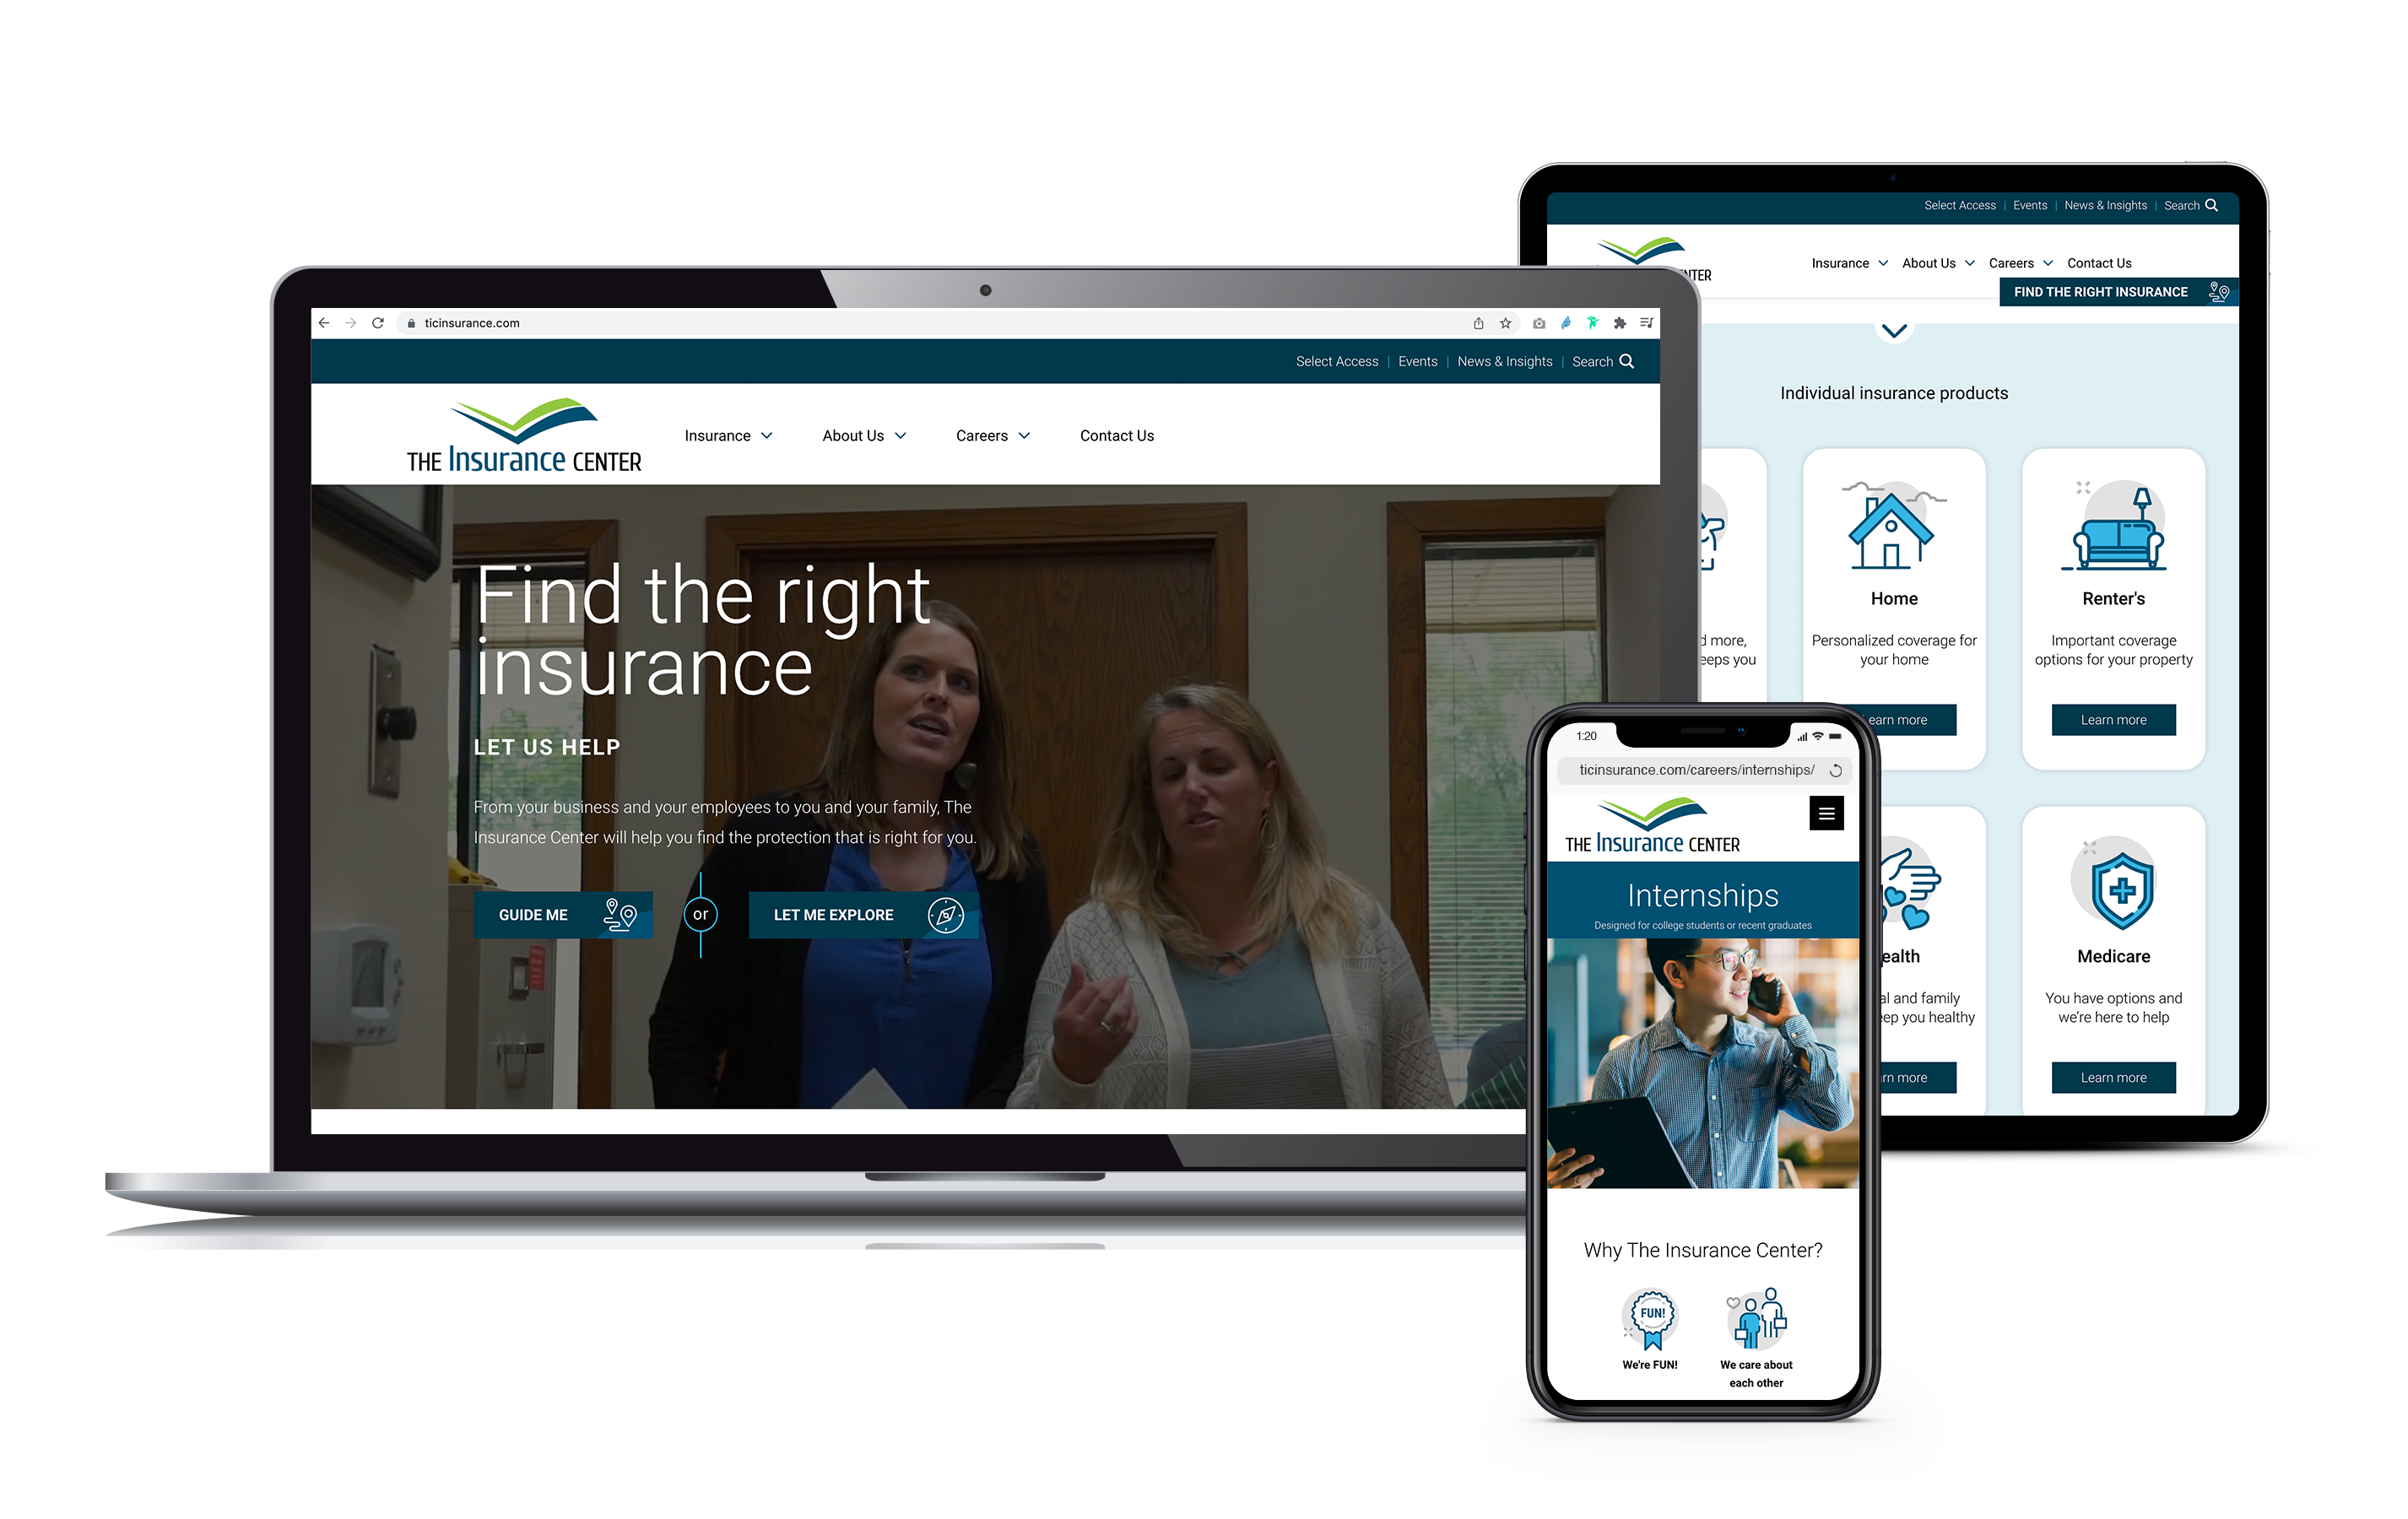 The Insurance Center website